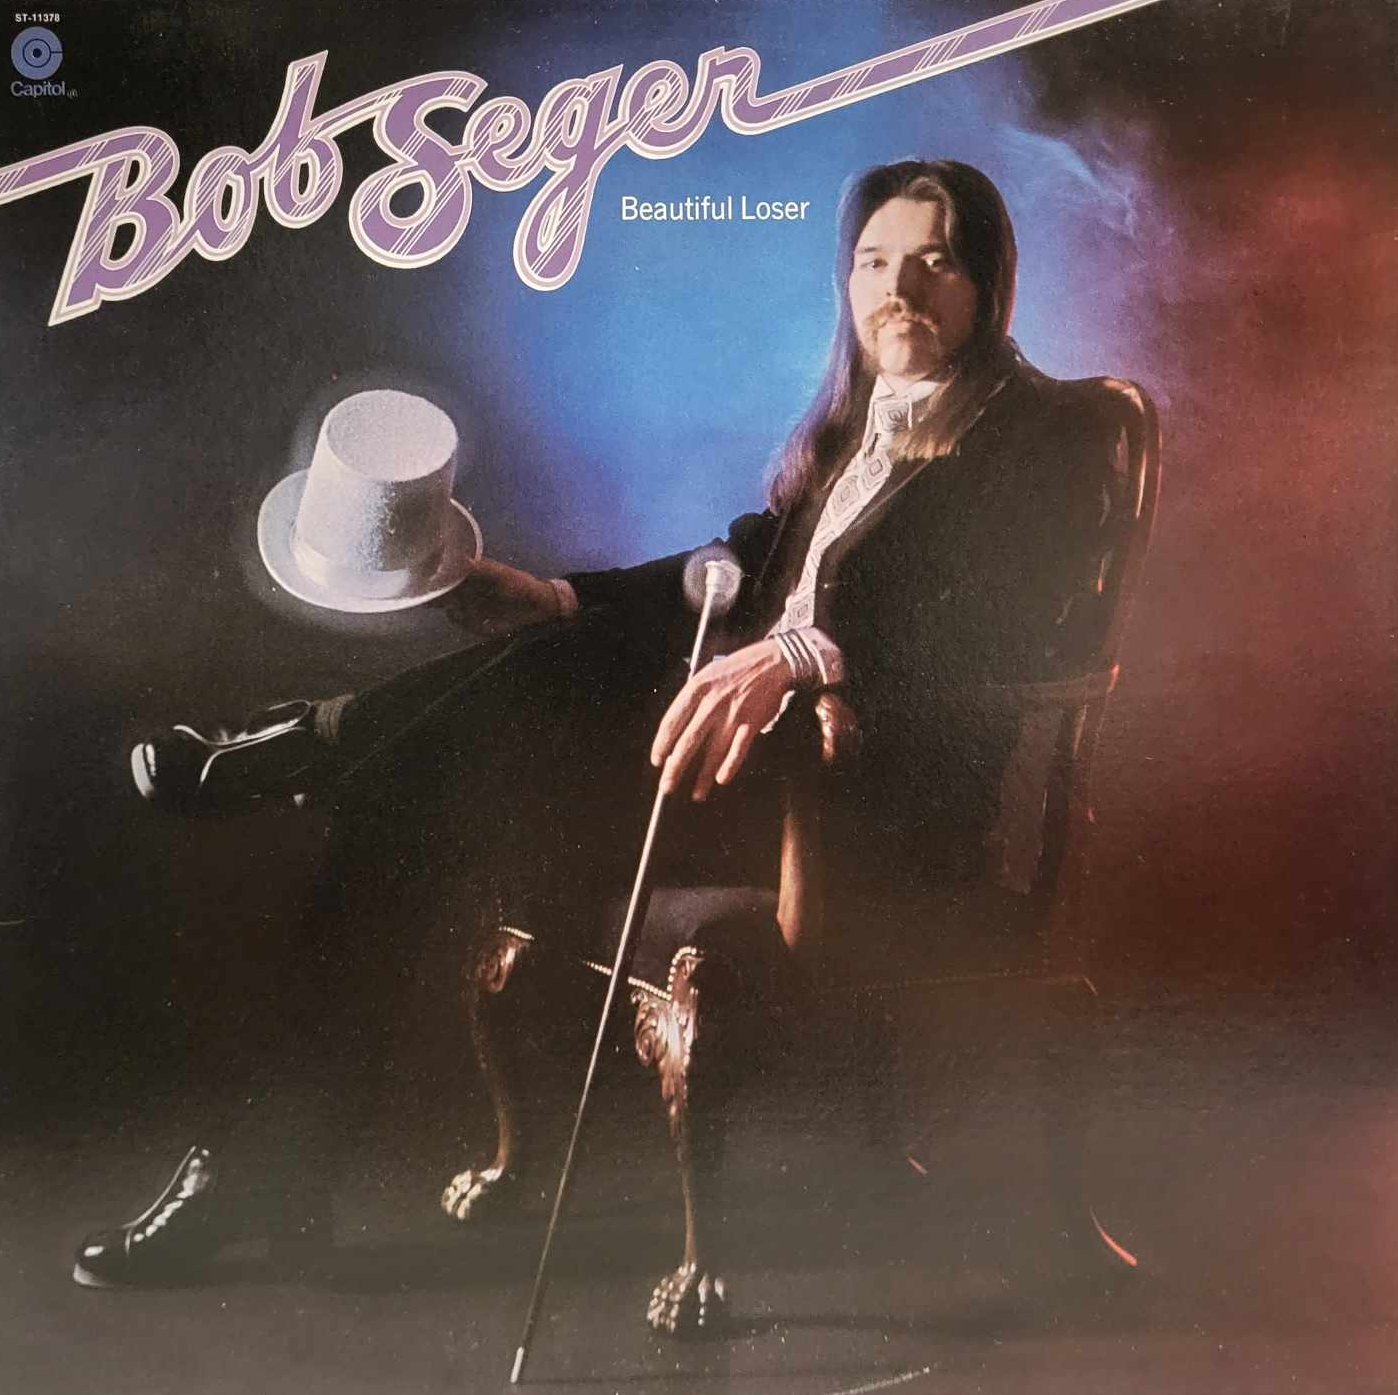 BOB SEGER - BEAUTIFUL LOSER